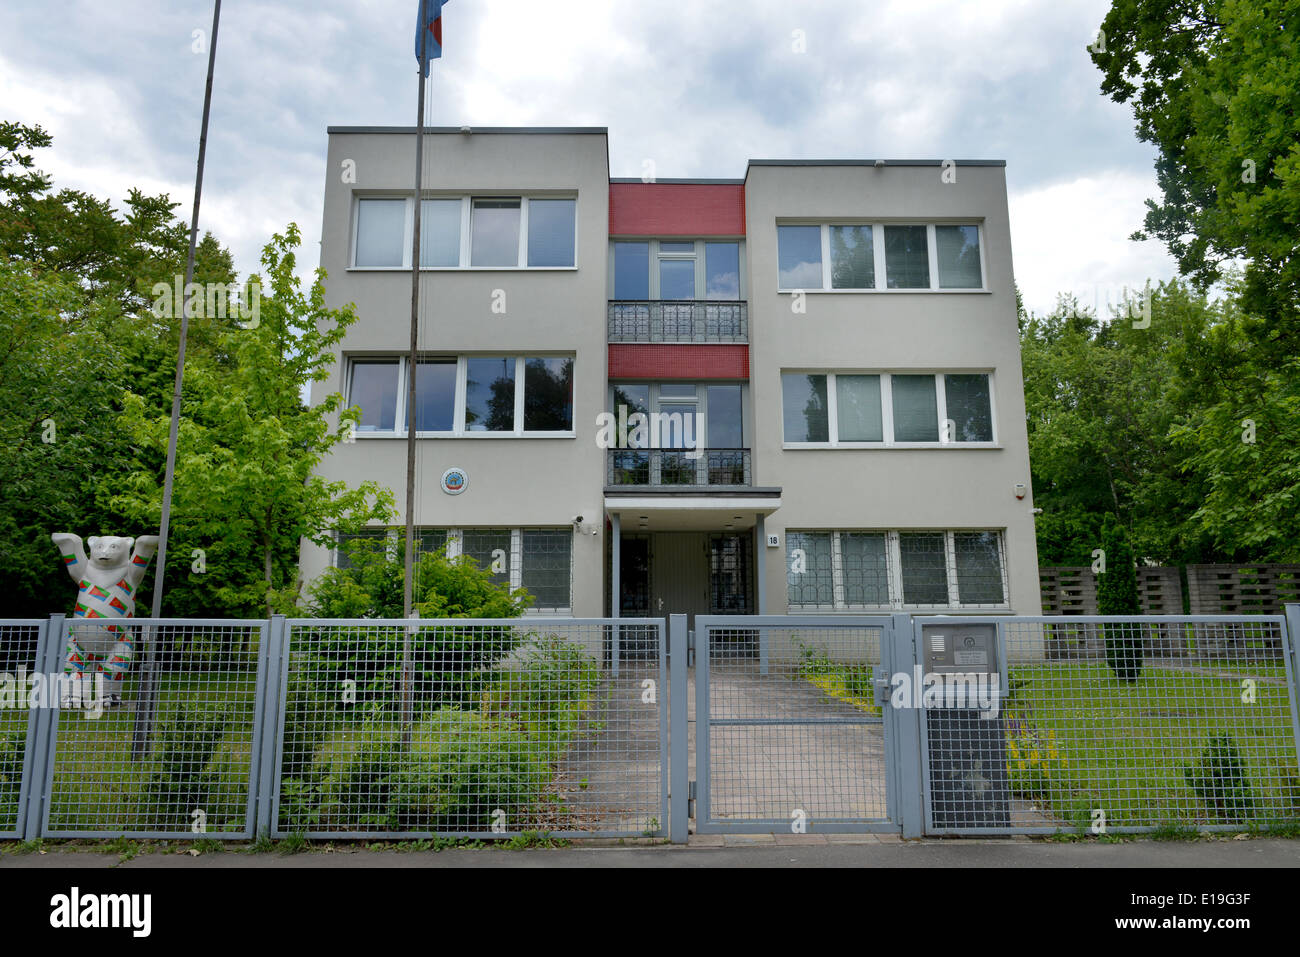 Botschaft Érythrée, Stavangerstrasse, Pankow, Berlin, Deutschland Banque D'Images